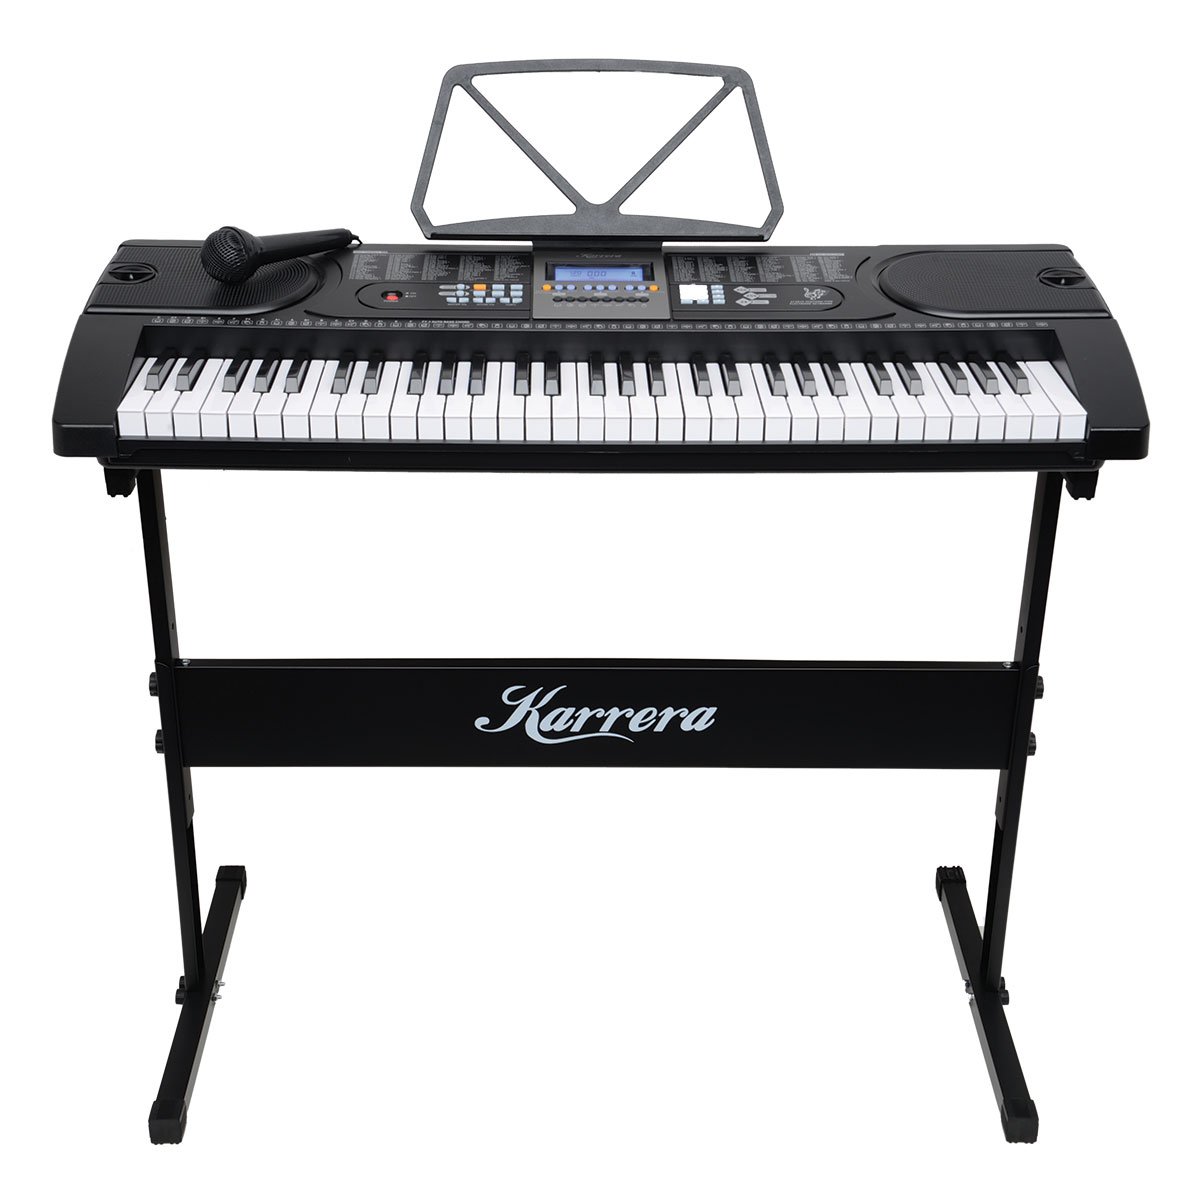 Karrera 61 Keys Electronic Keyboard Piano with Stand - Black 1